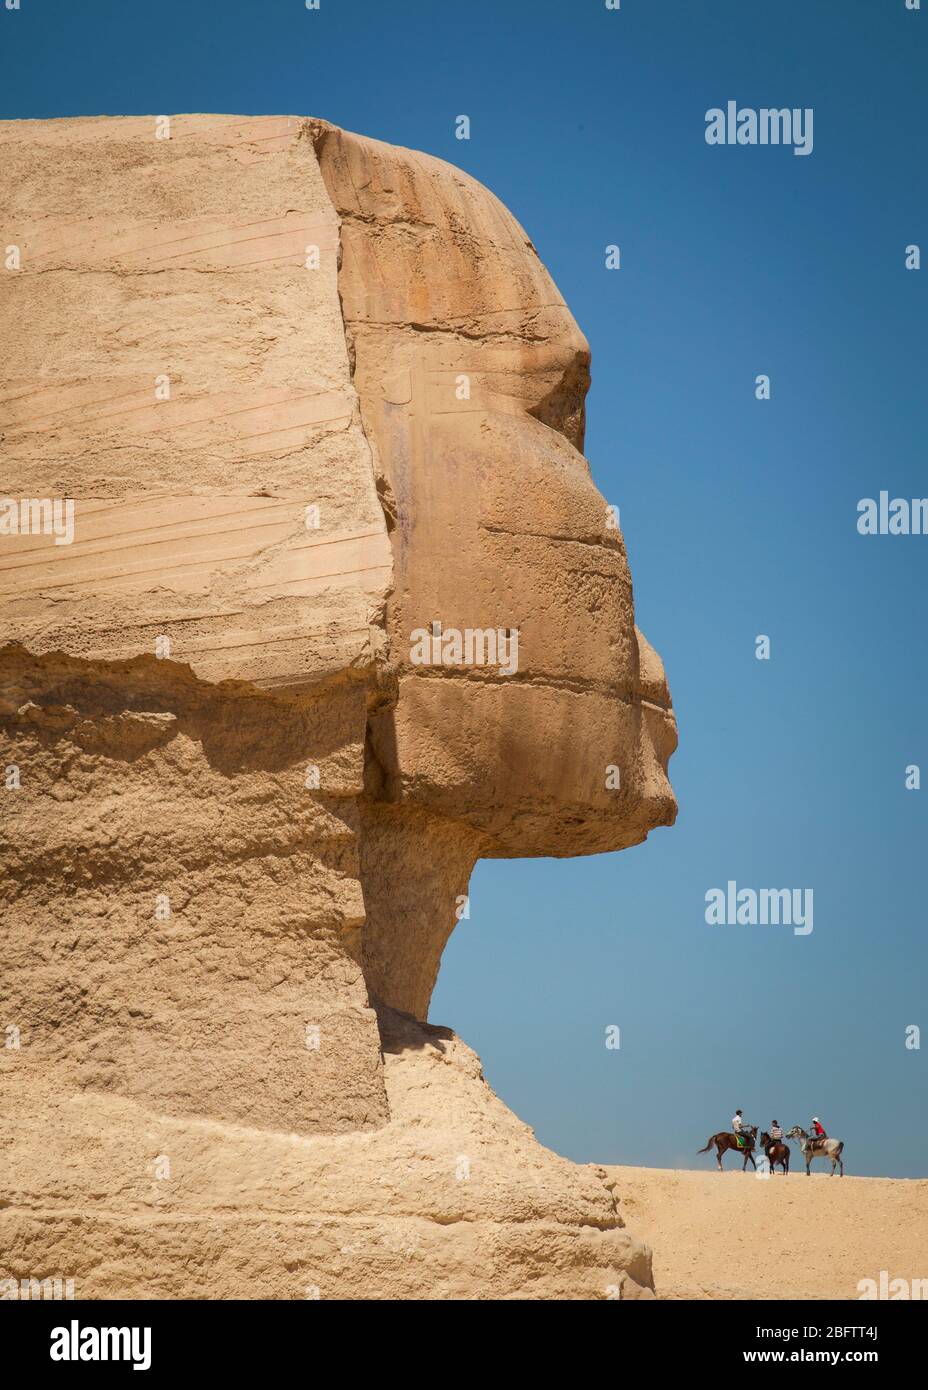 Le Grand Sphinx de Giza dans la vue de profil Banque D'Images